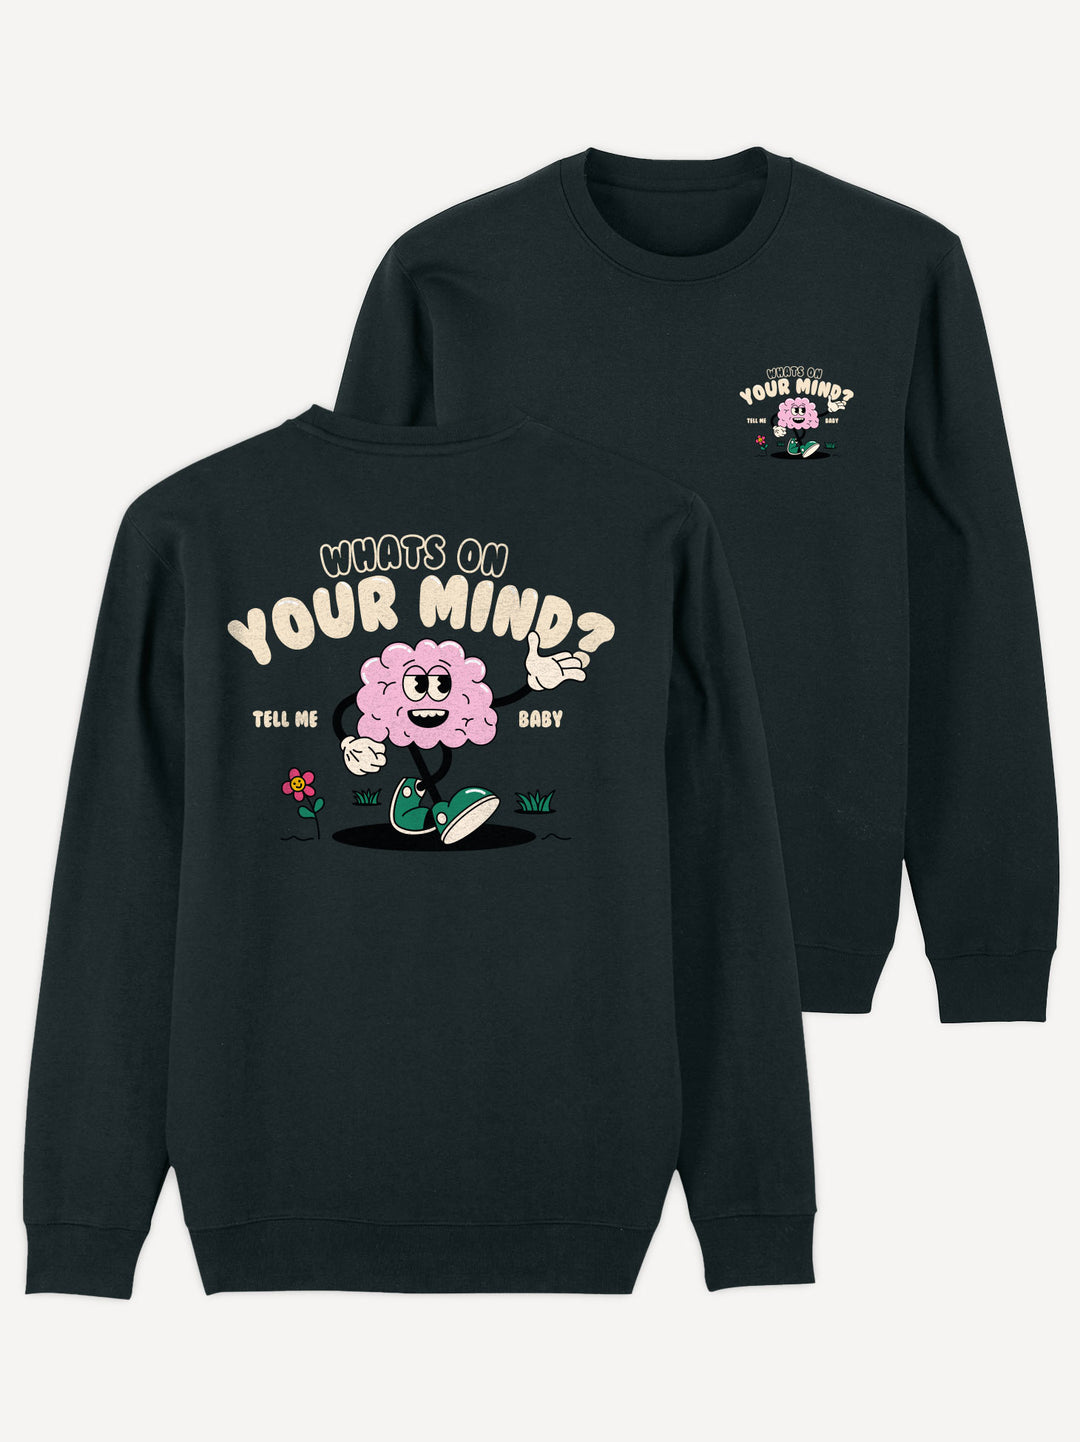 Whats On Your Mind Sweatshirt